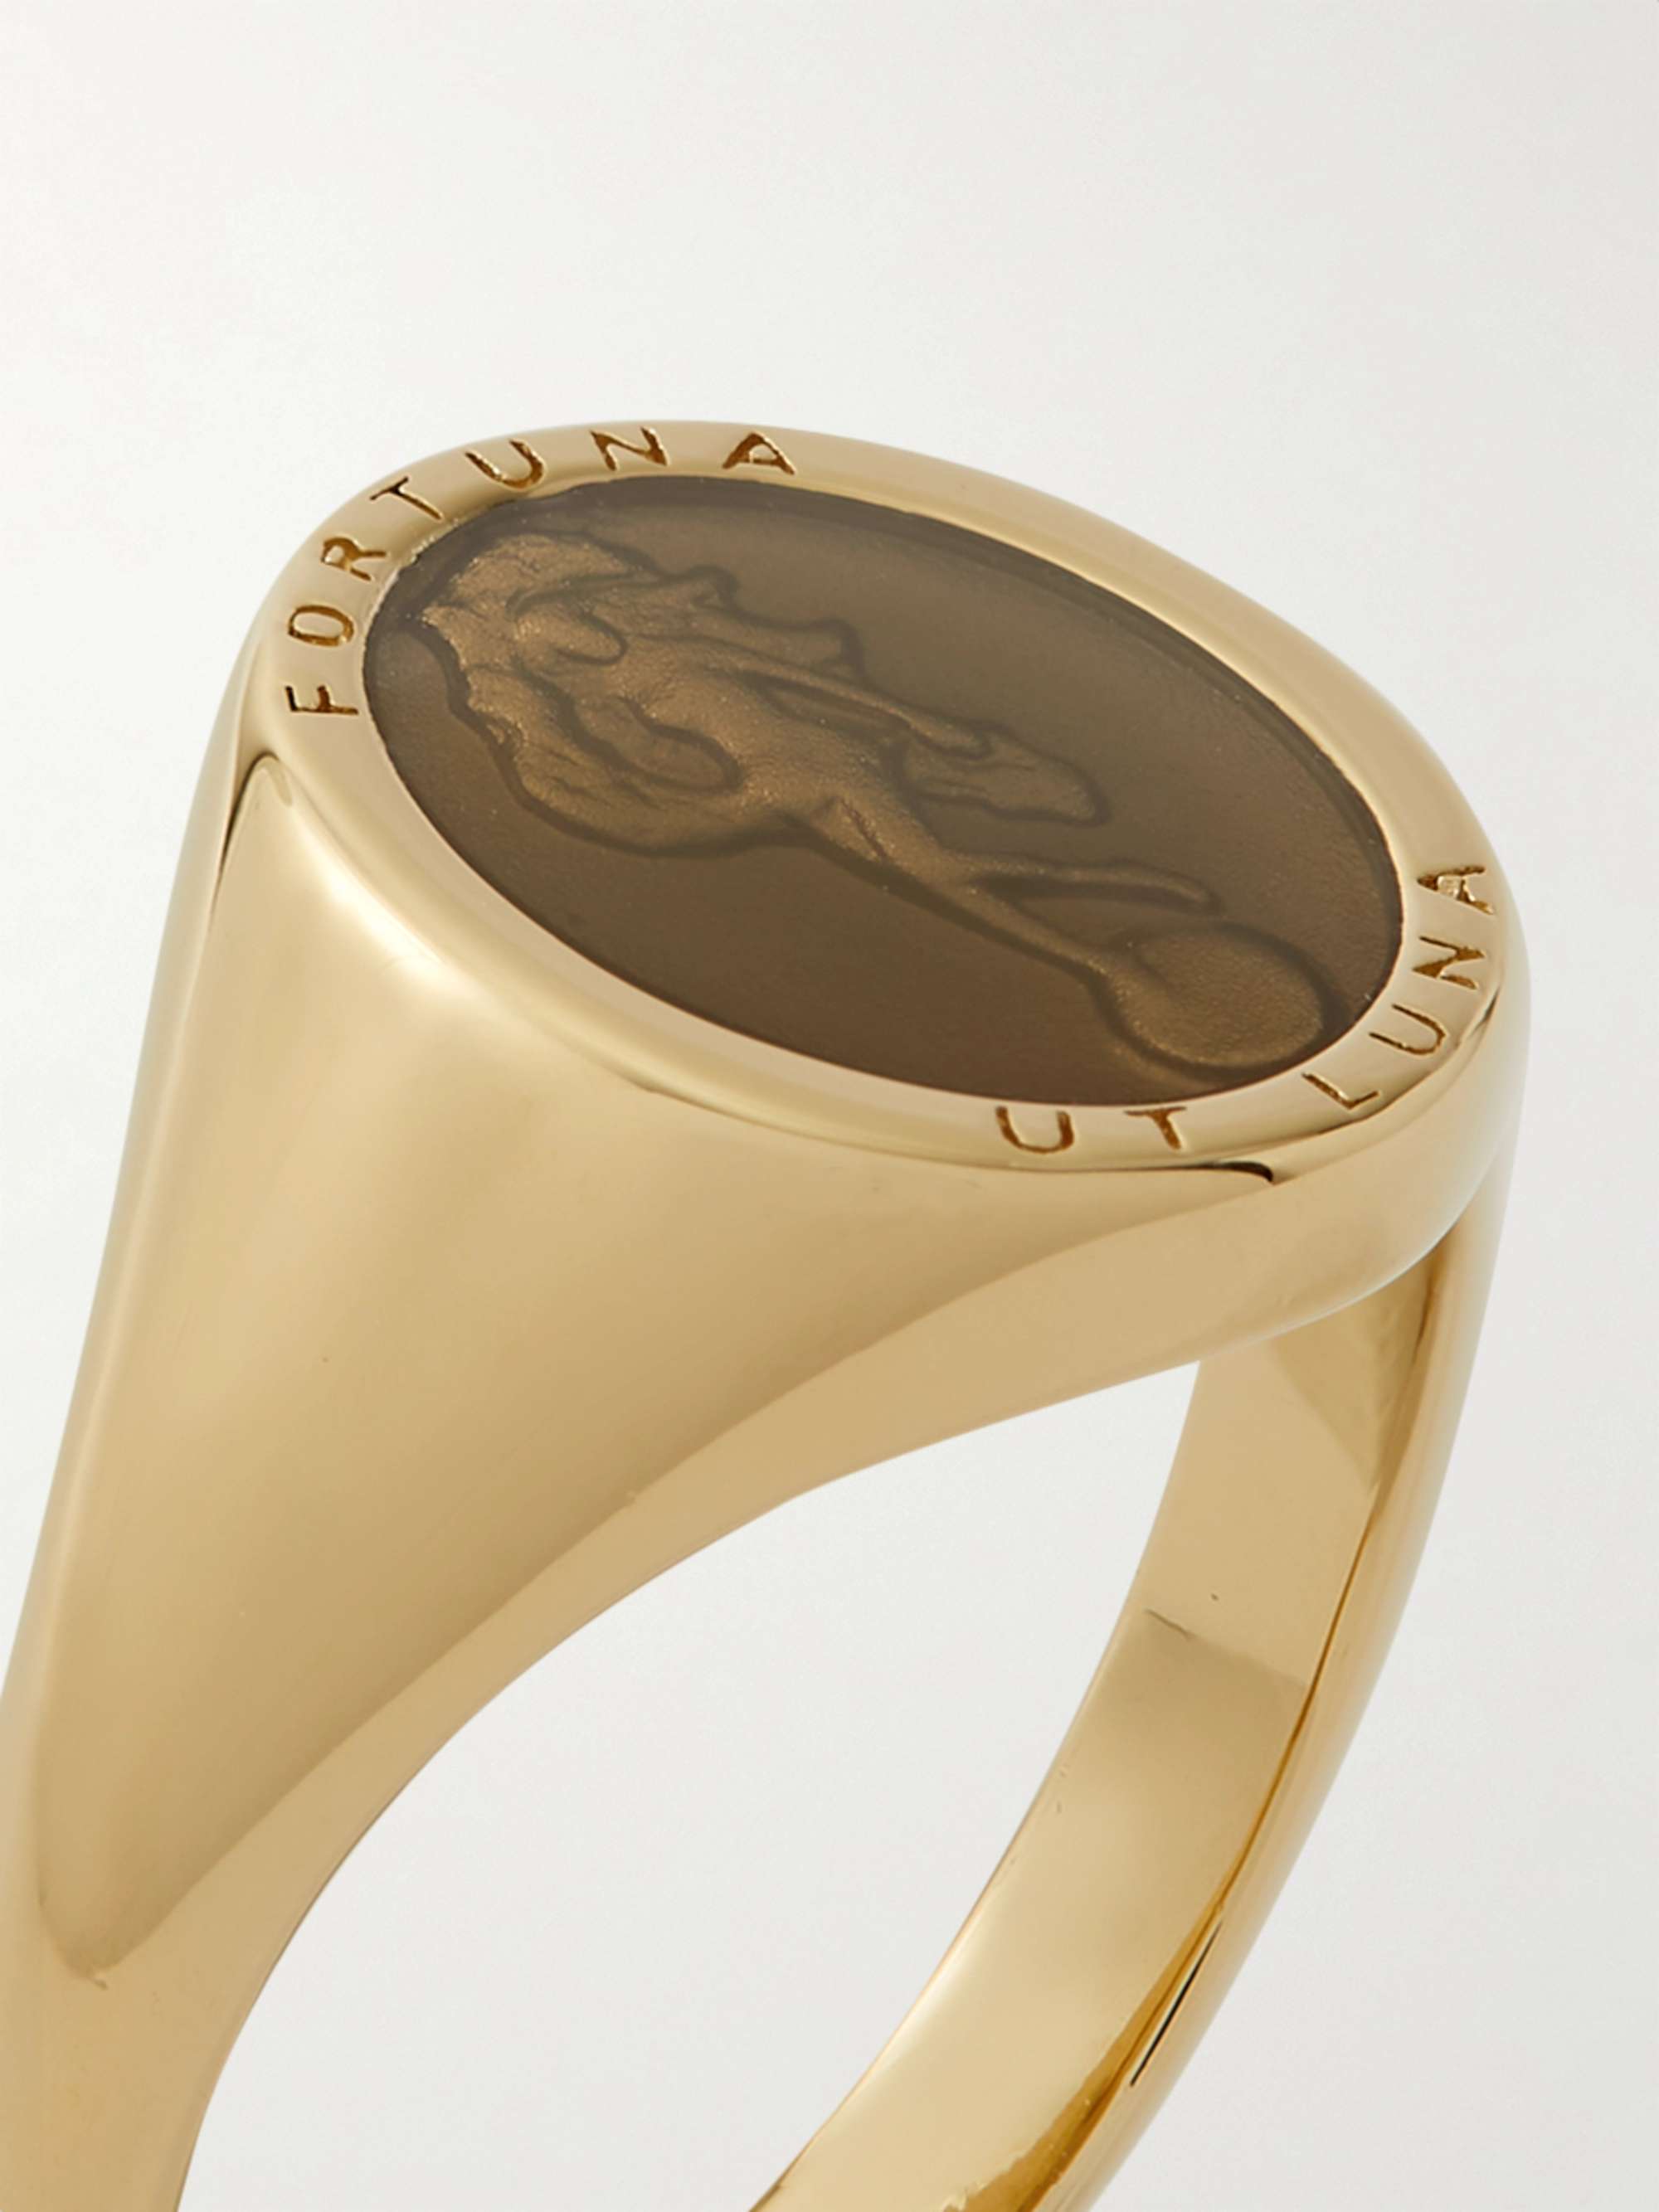 MIANSAI Gold Vermeil and Enamel Signet Ring